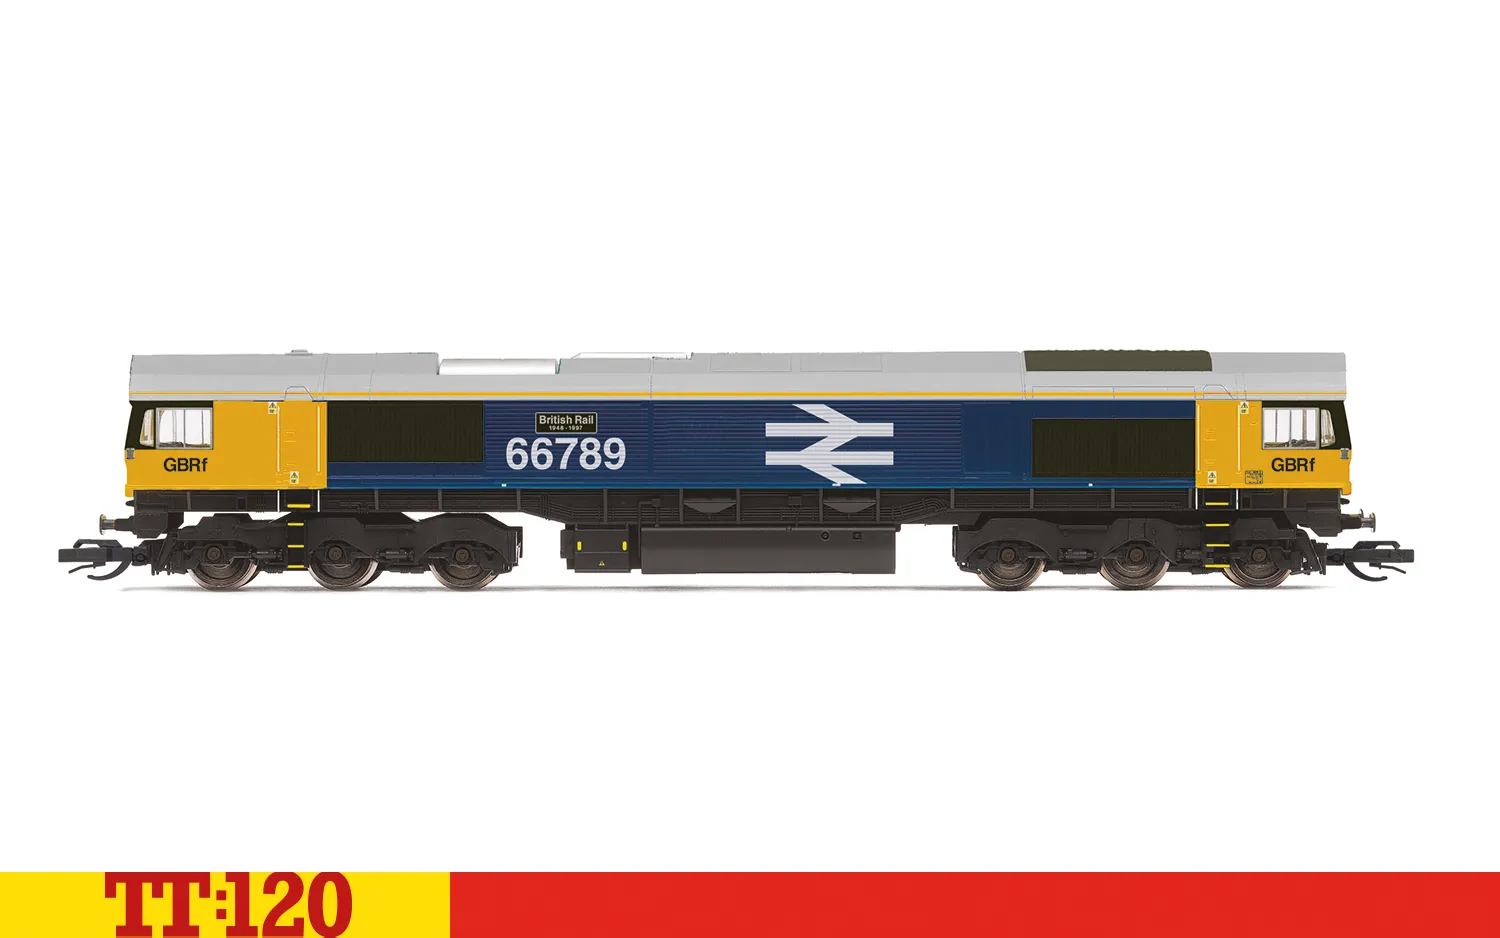 GBRf, Classe 66, Co-Co, 66789, 'British Rail 1948-1997'- Ep. 11